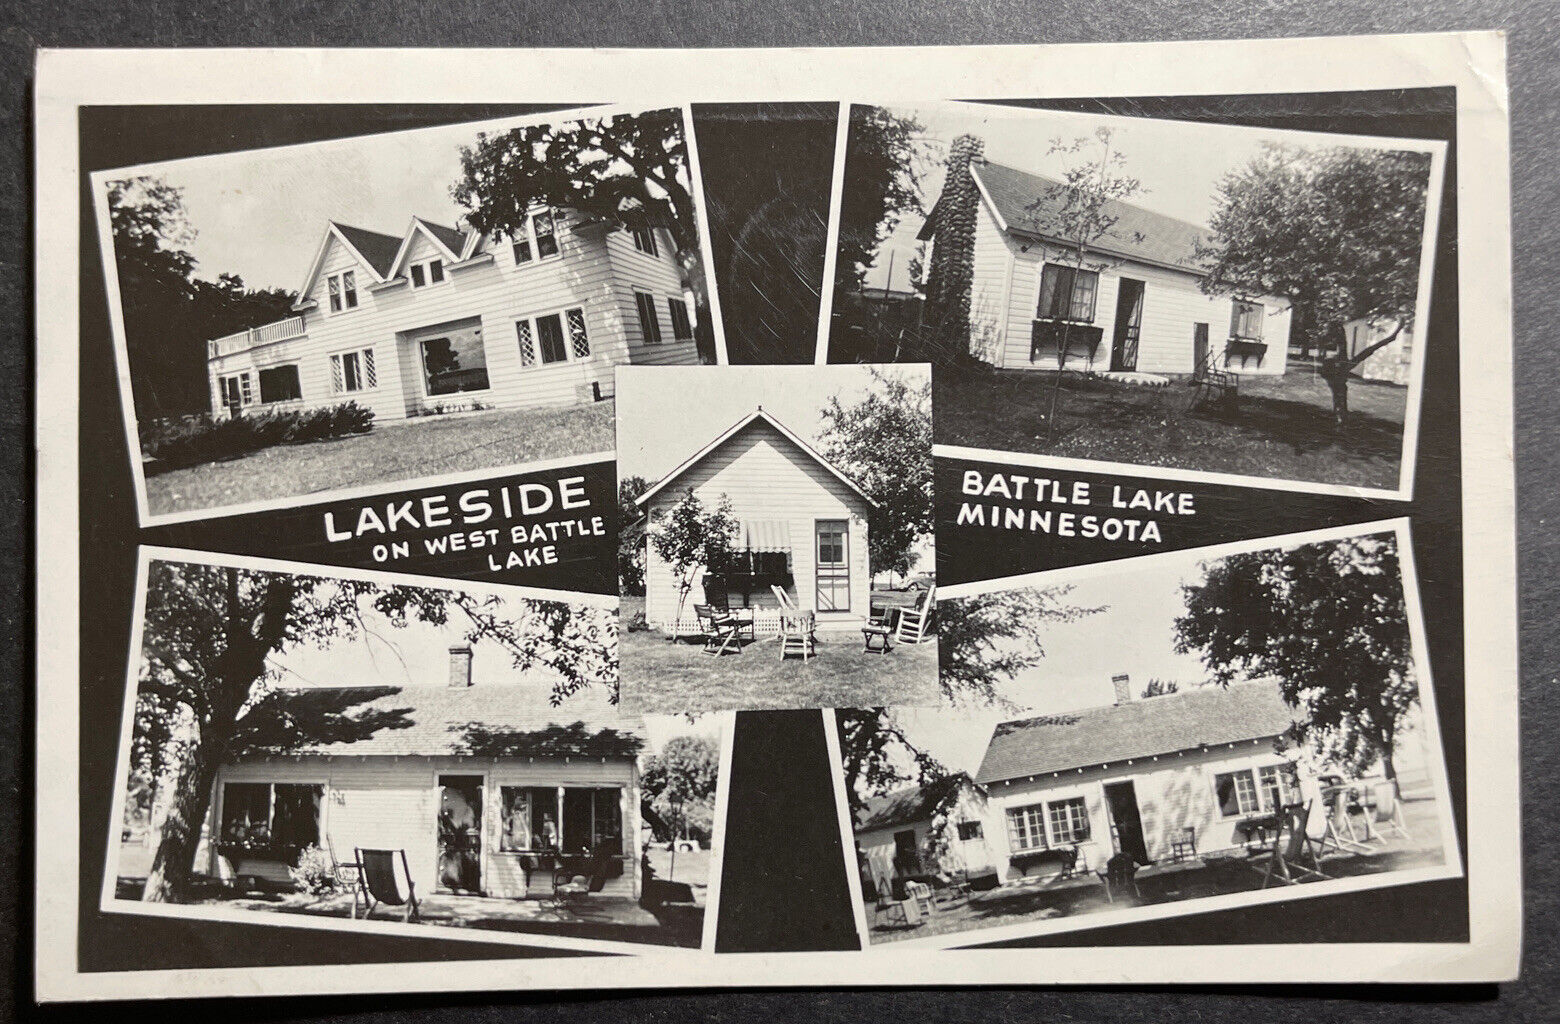 Lakeside on West Battle Lake Battle Lake Minnesota multi-view RPPC 1952